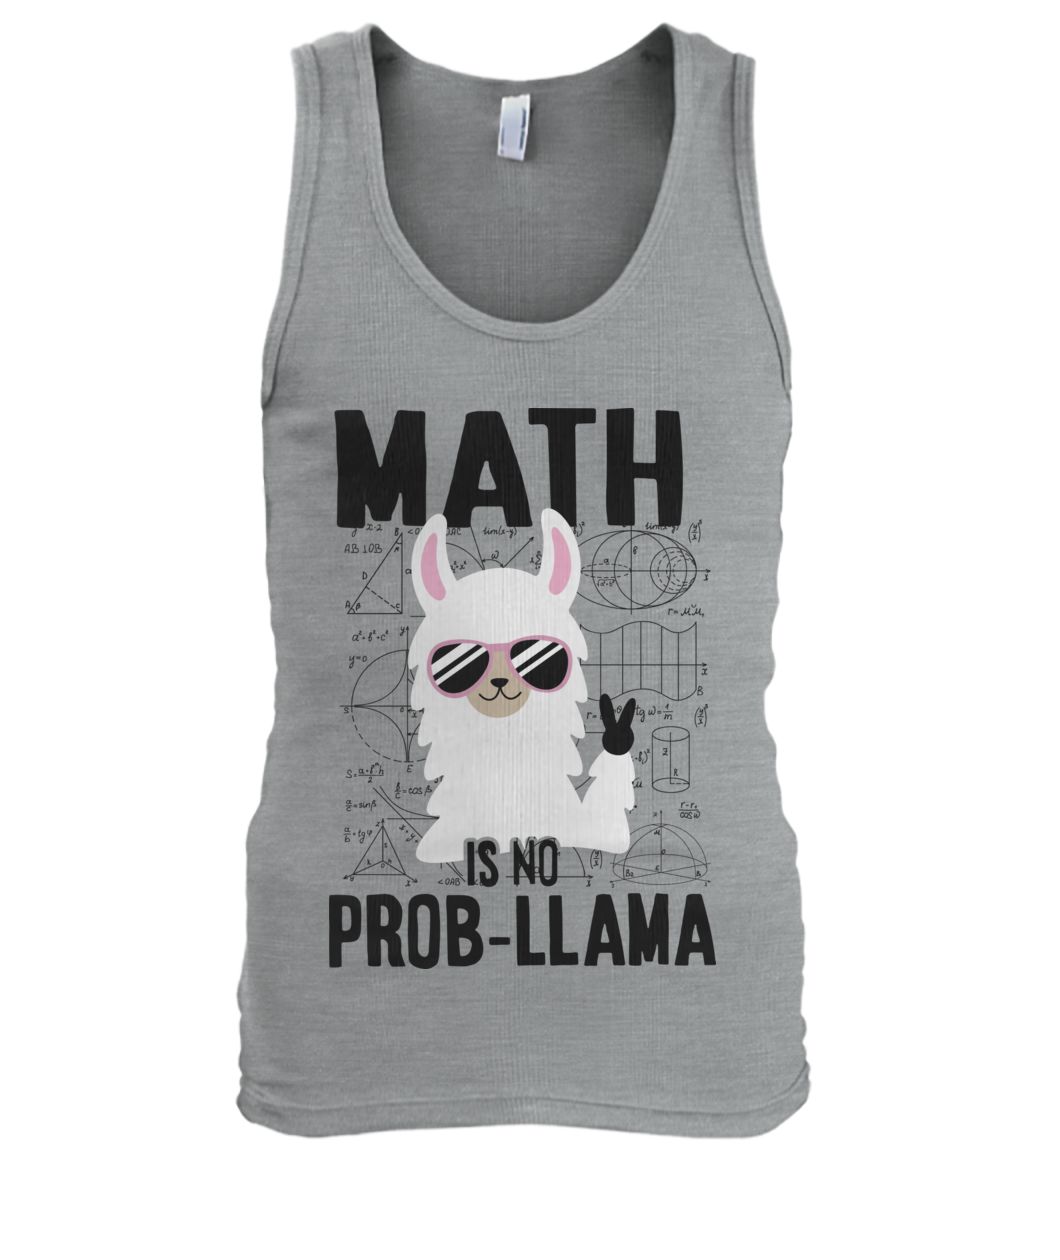 Math is no prob-llama back to school llama men's tank top